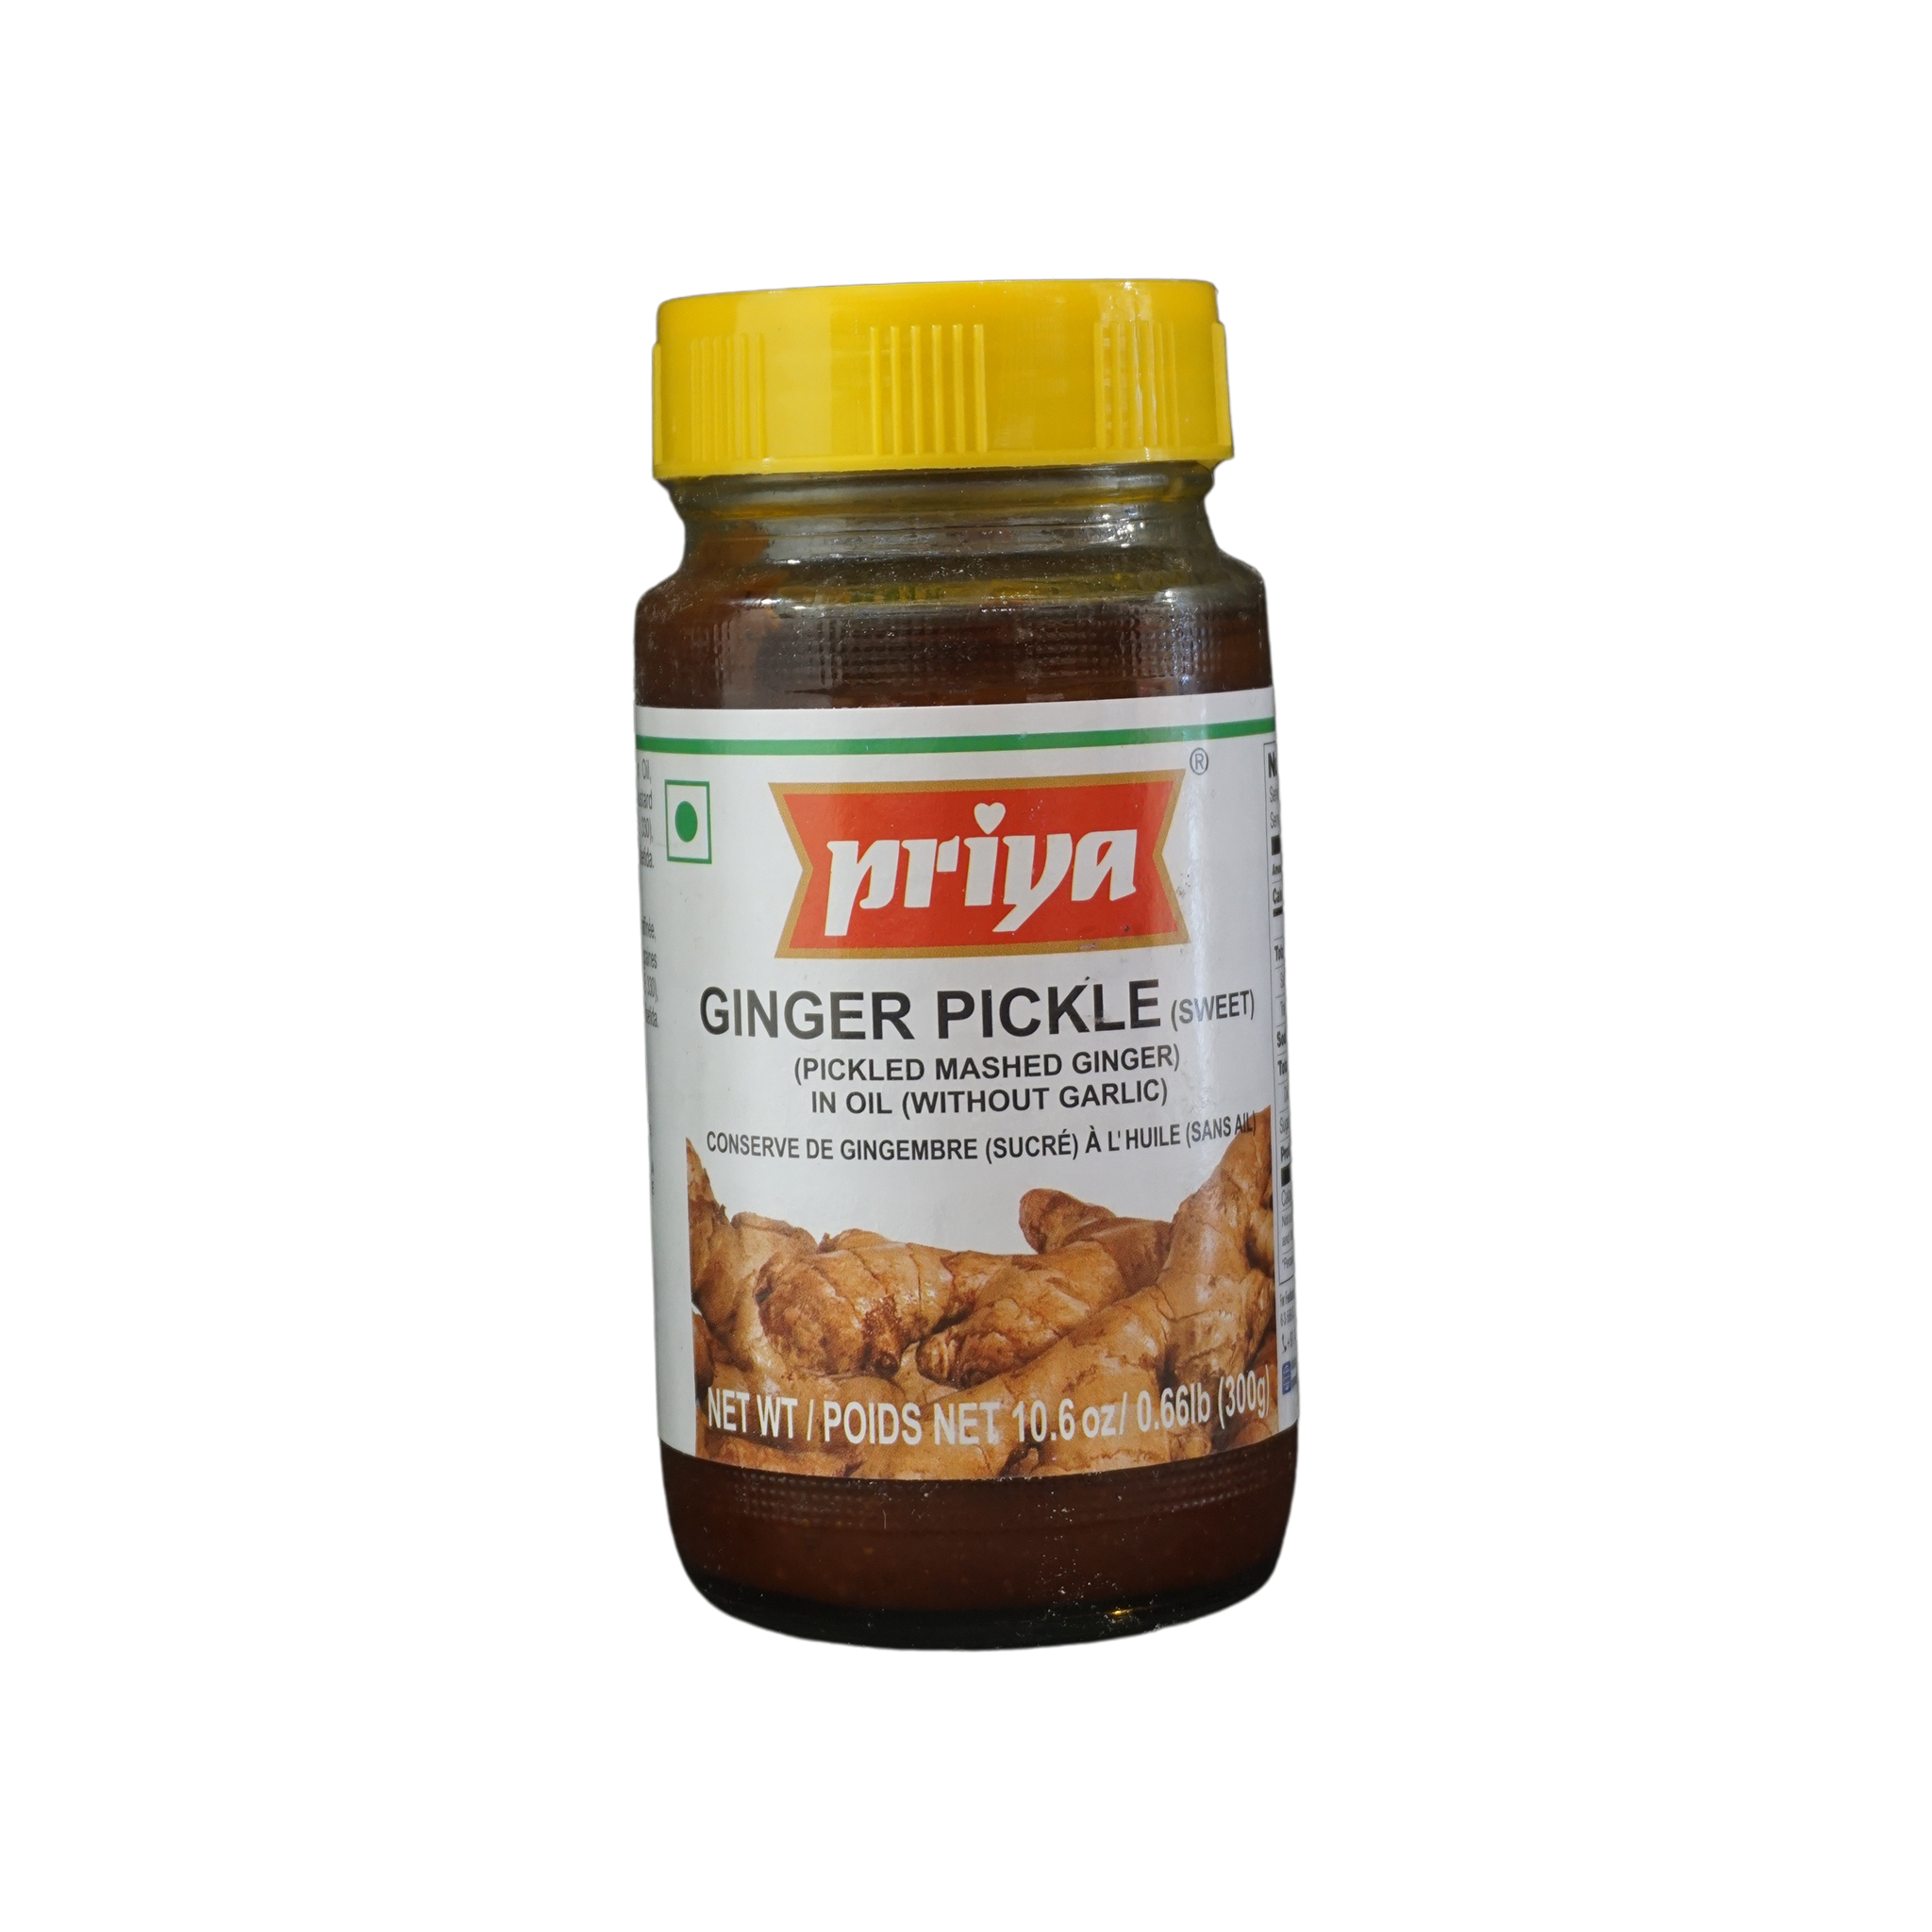 Priya Ginger Pickle 300g Jaldi